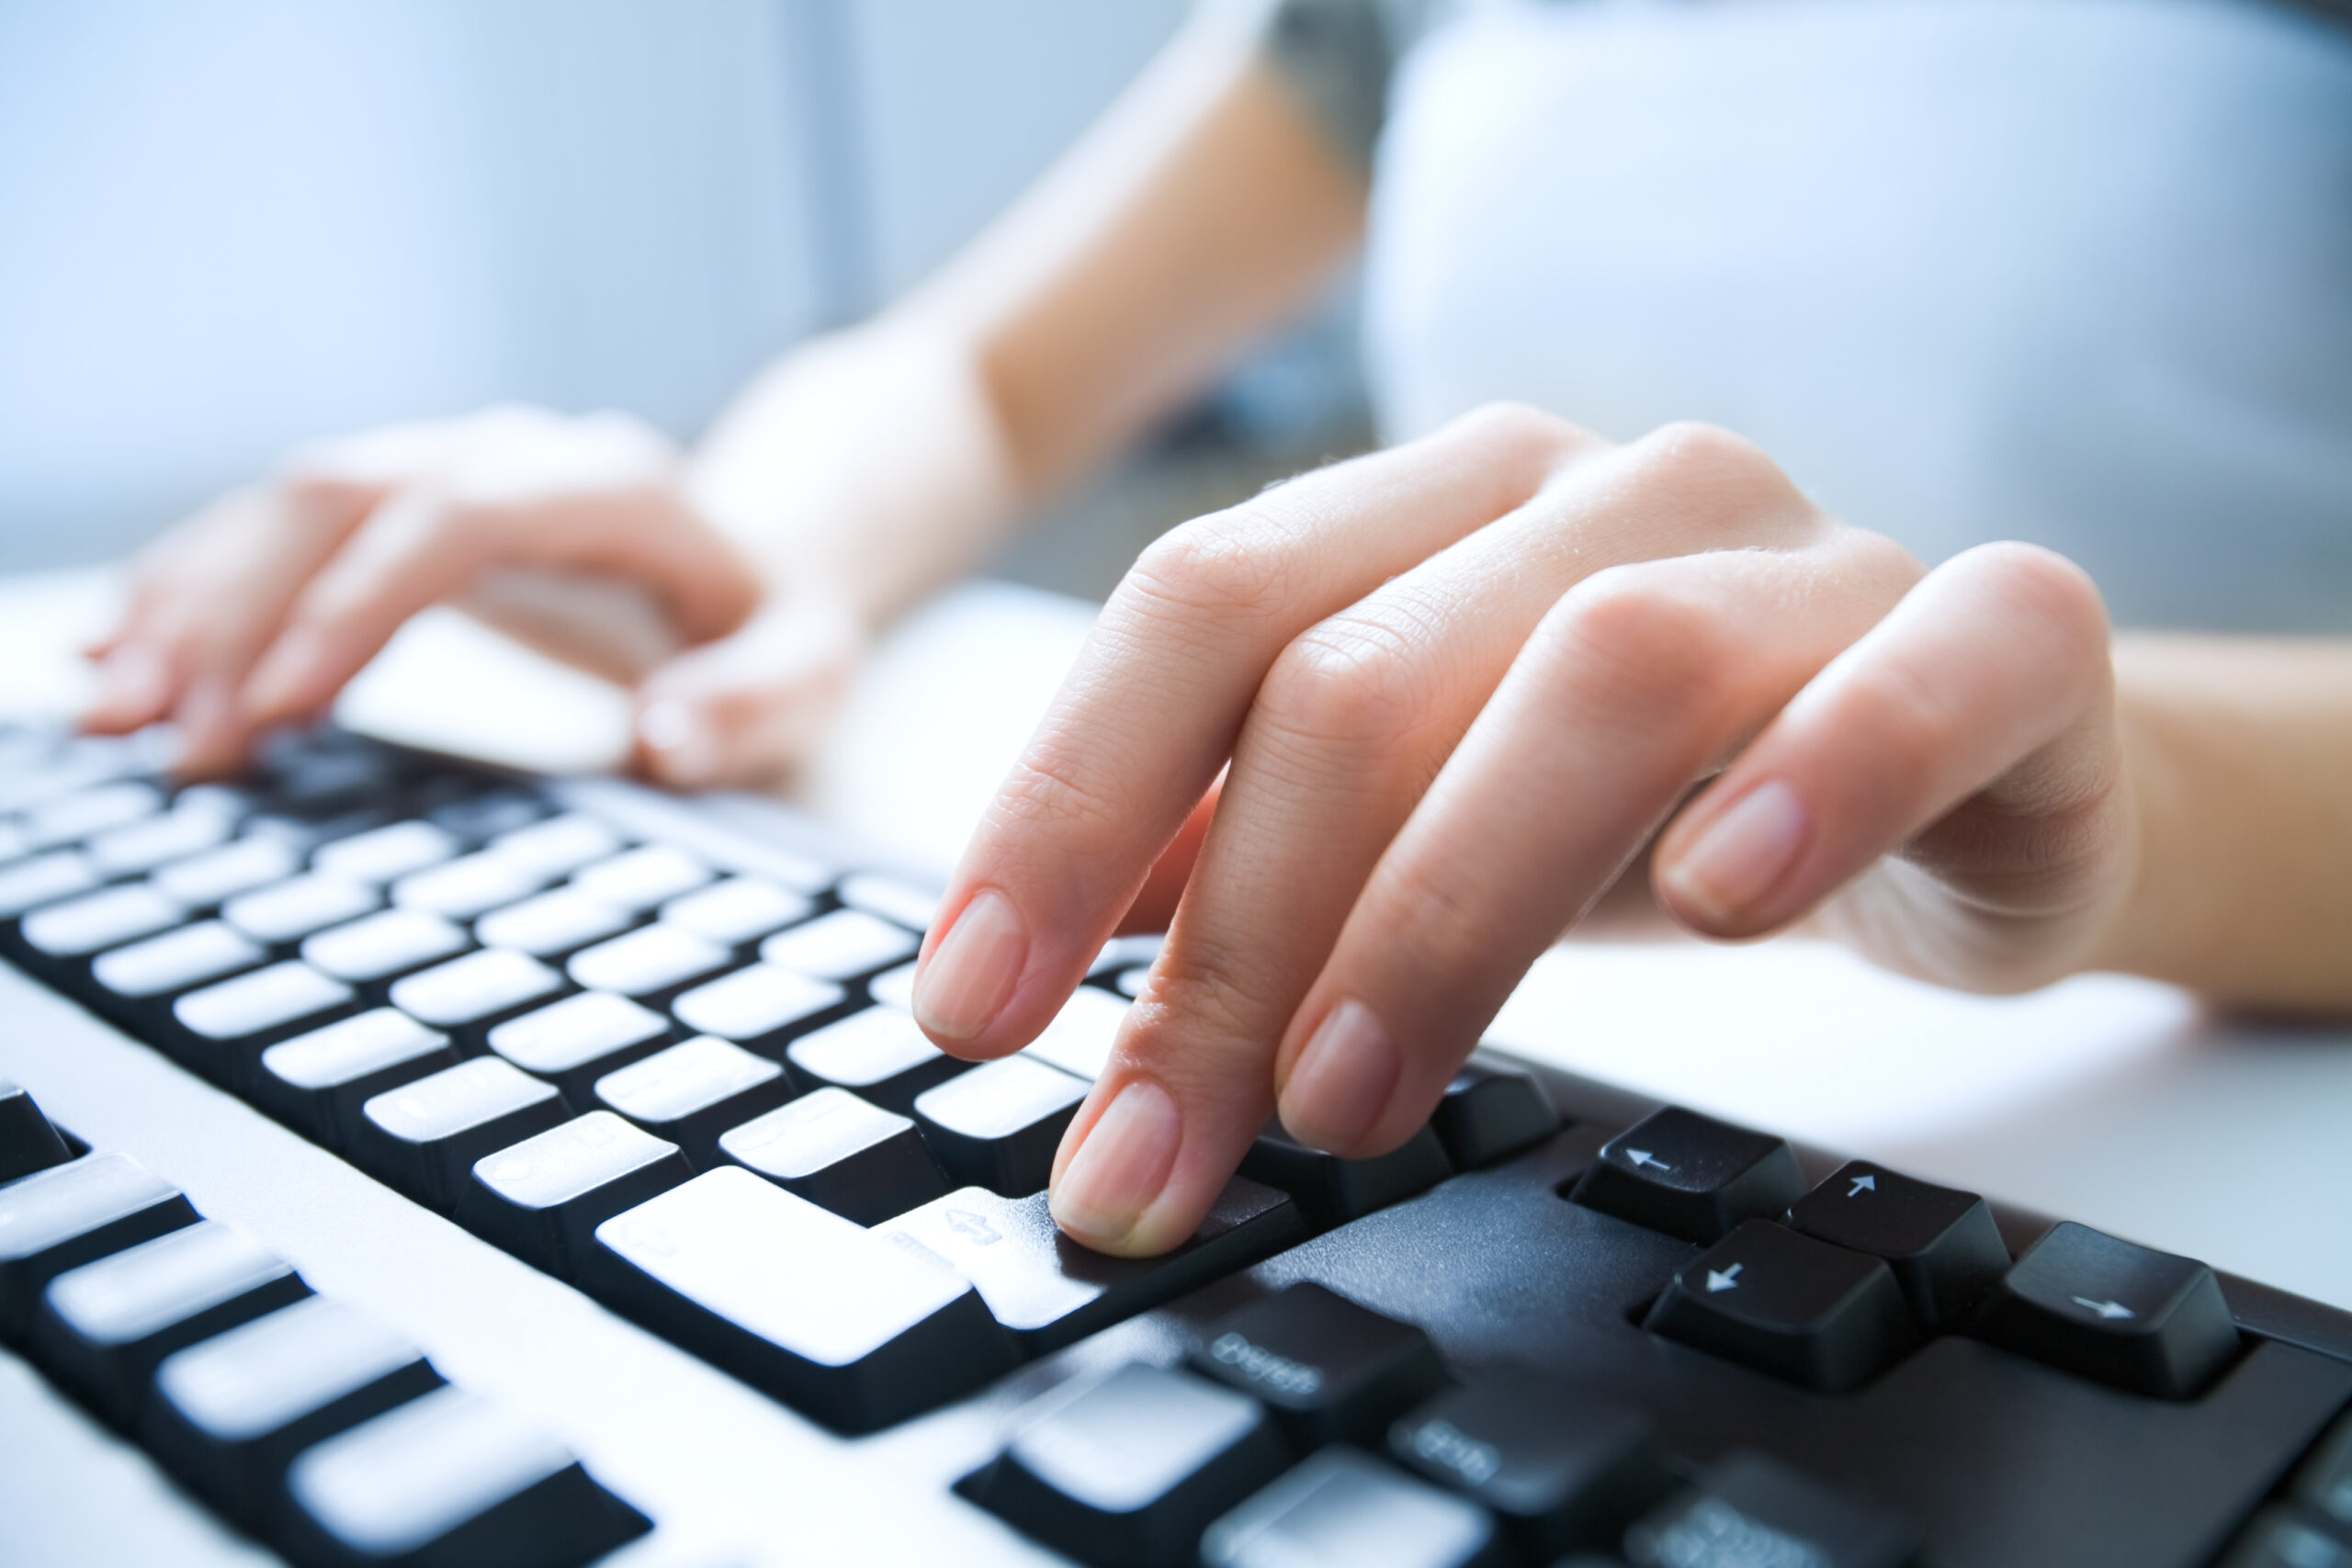 Close-up of hand pressing keys on keyboard.